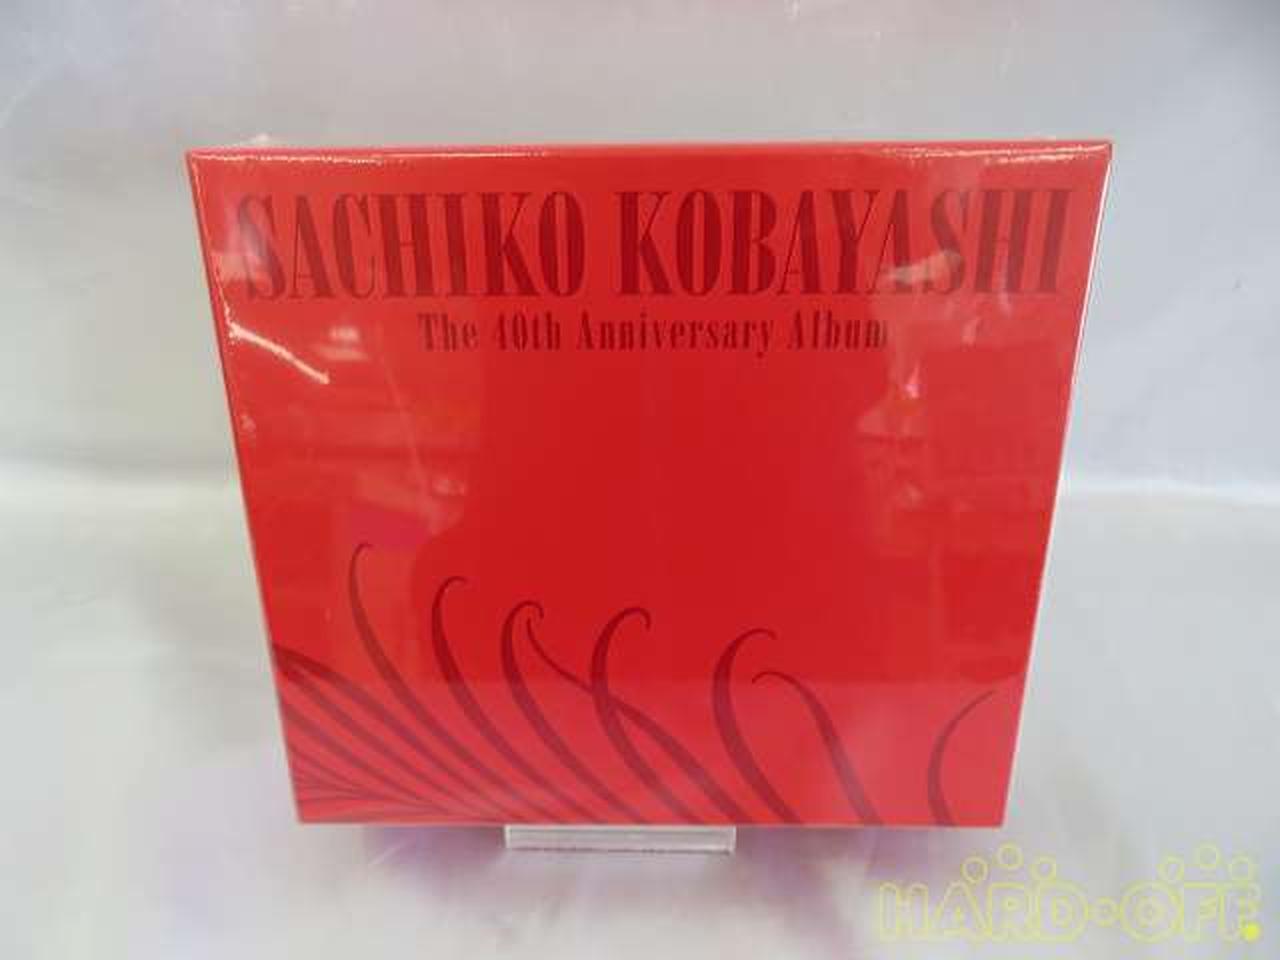 Columbia Music Entertainment Peacock Sachiko Kobayashi 40Th Anniversary Album In